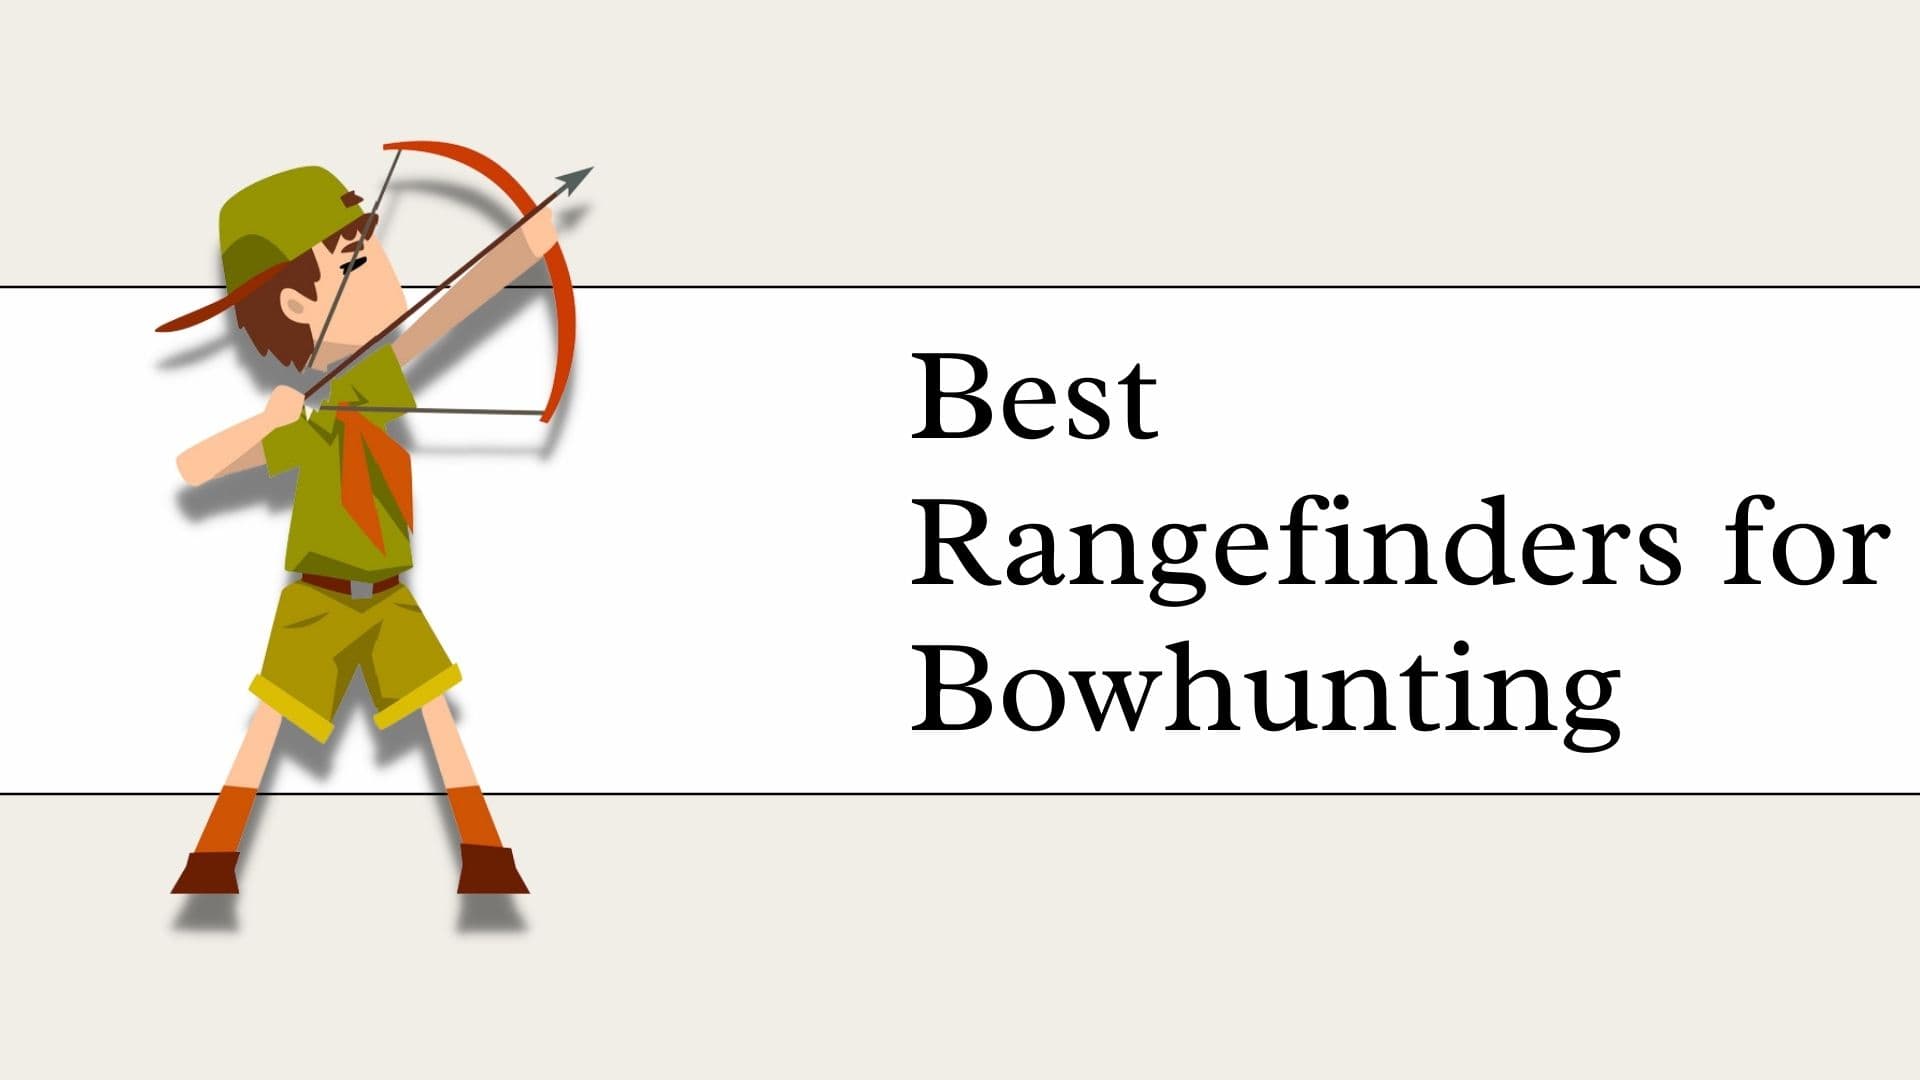 Best Rangefinders for Bowhunting